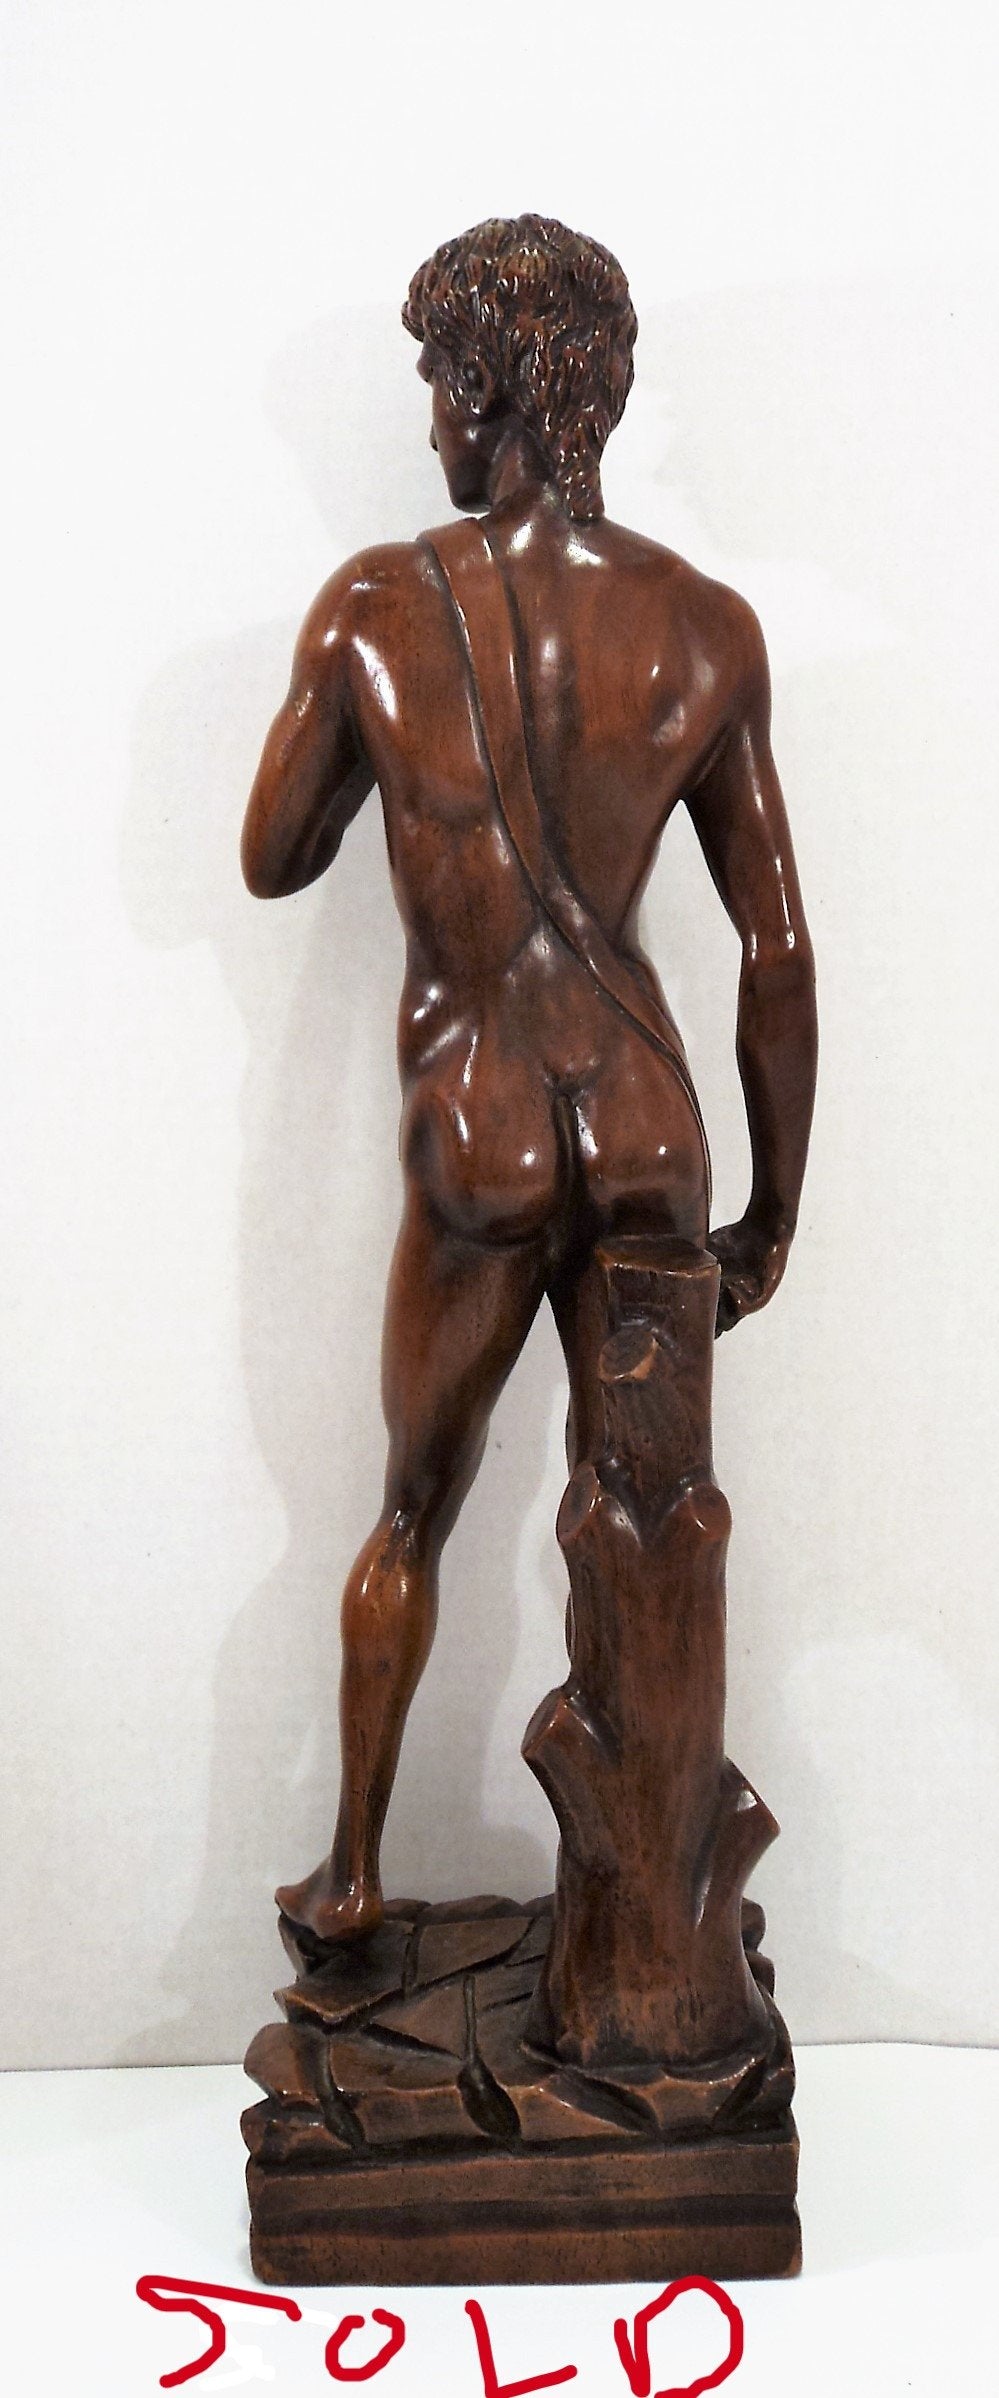 Wooden Male Nude Sculpture